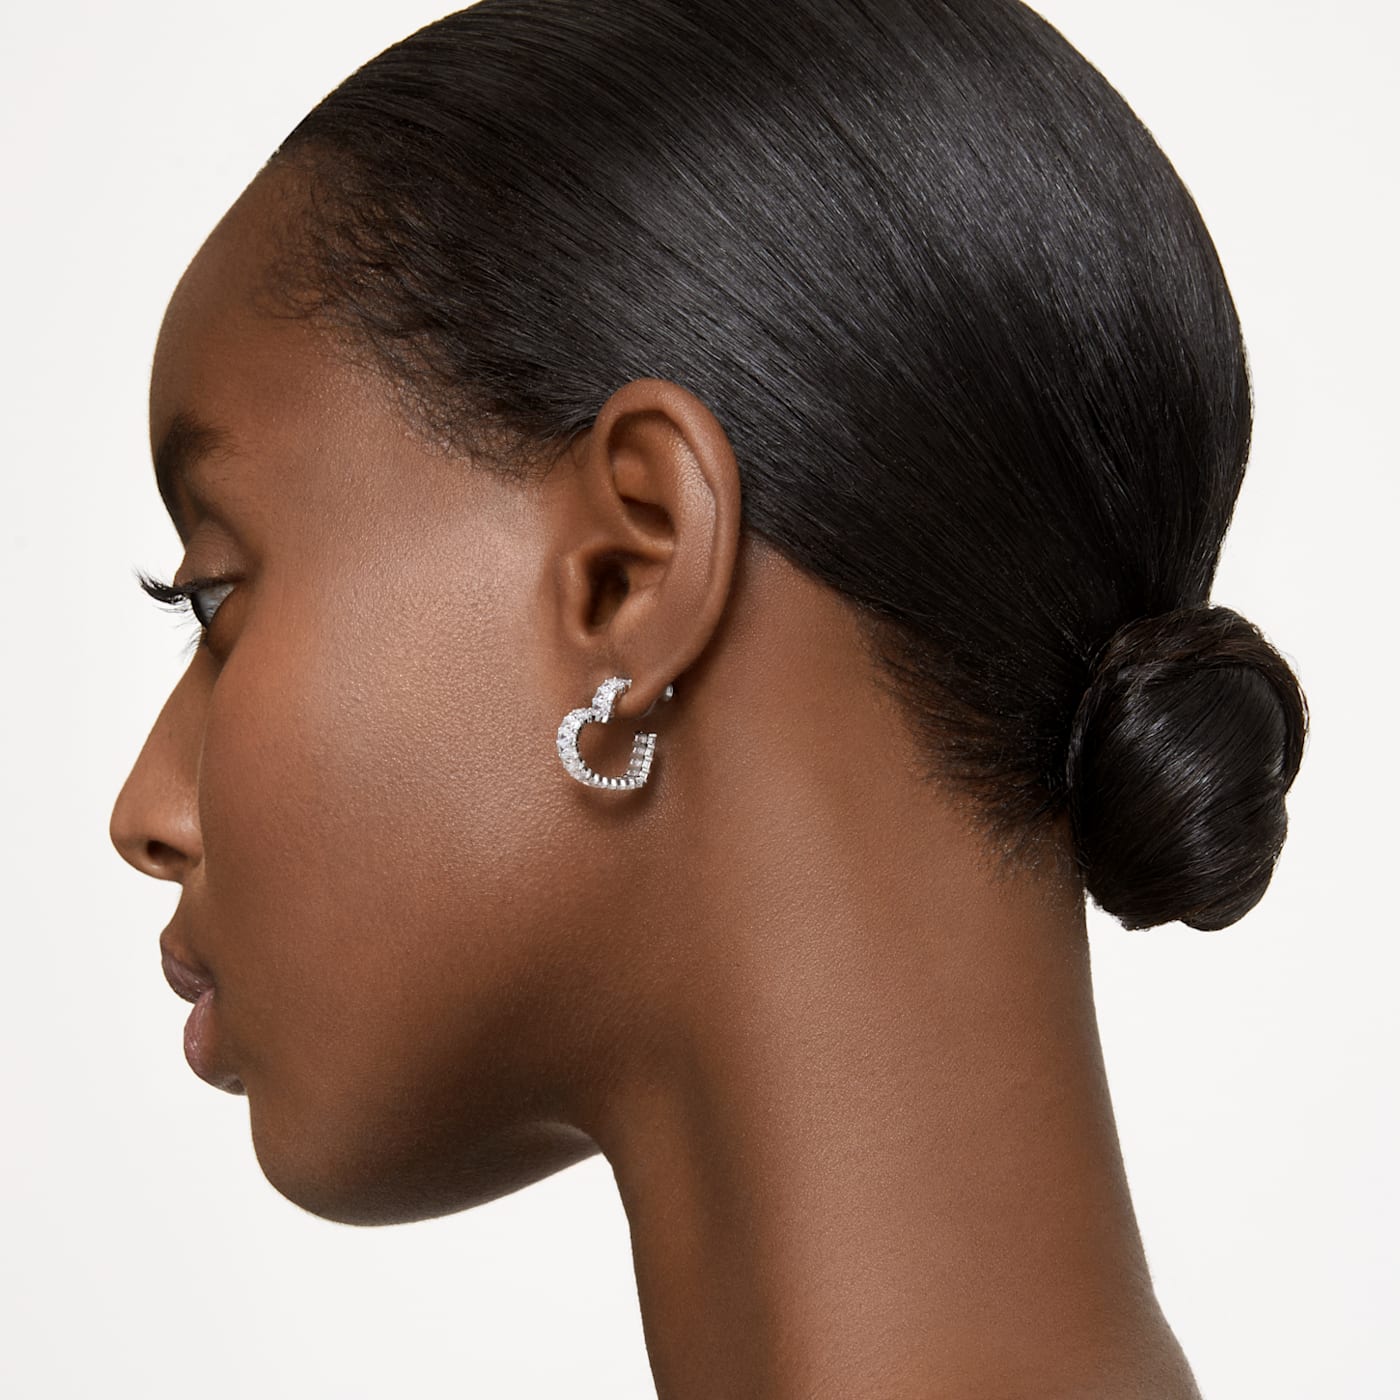 Swarovski Matrix hoop earrings